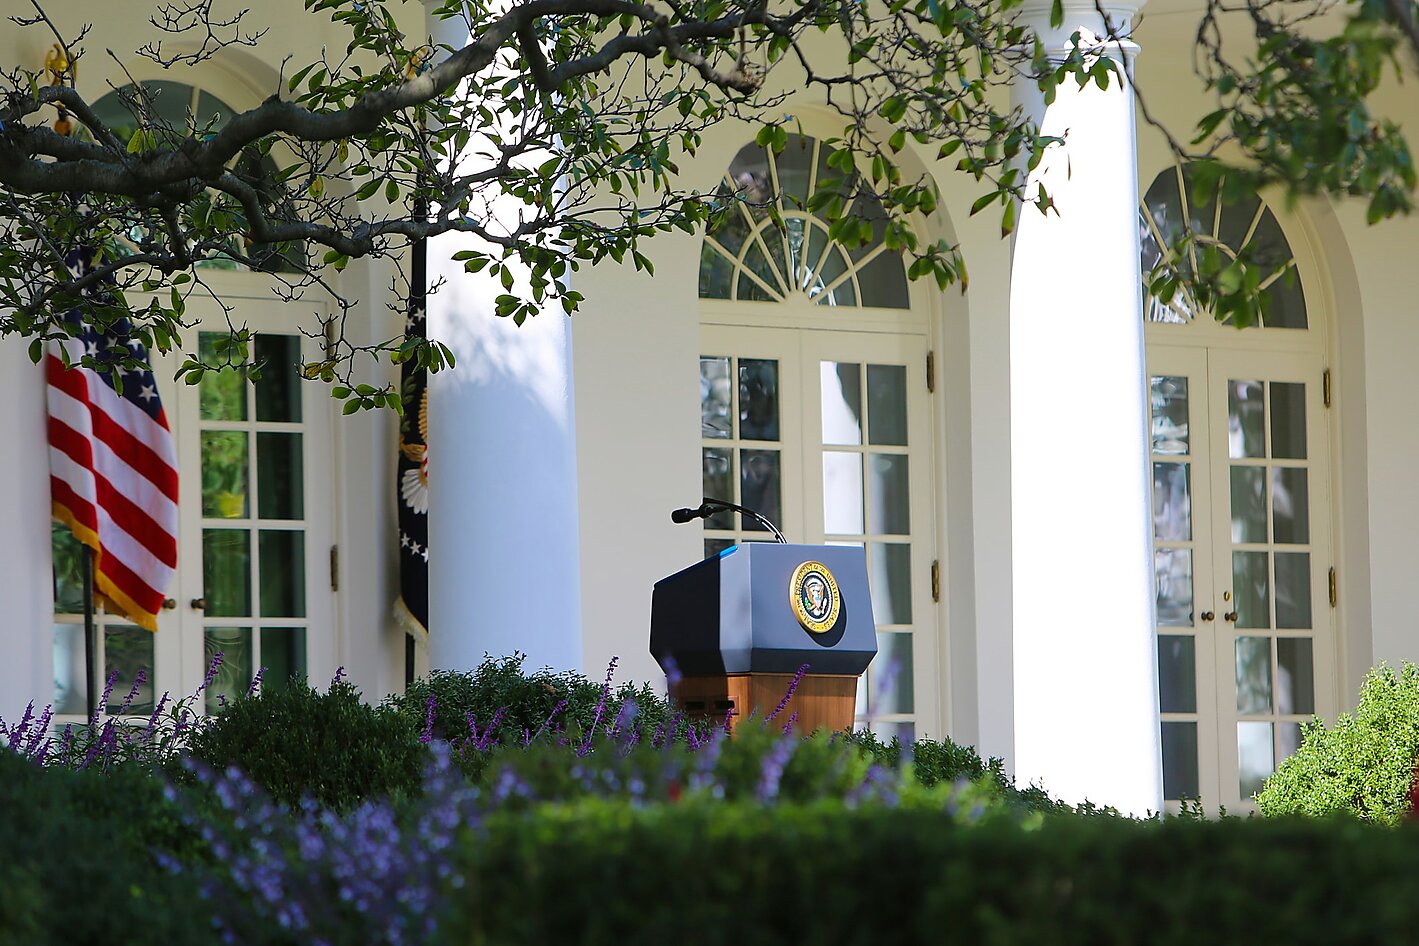 President podium in empty garden area